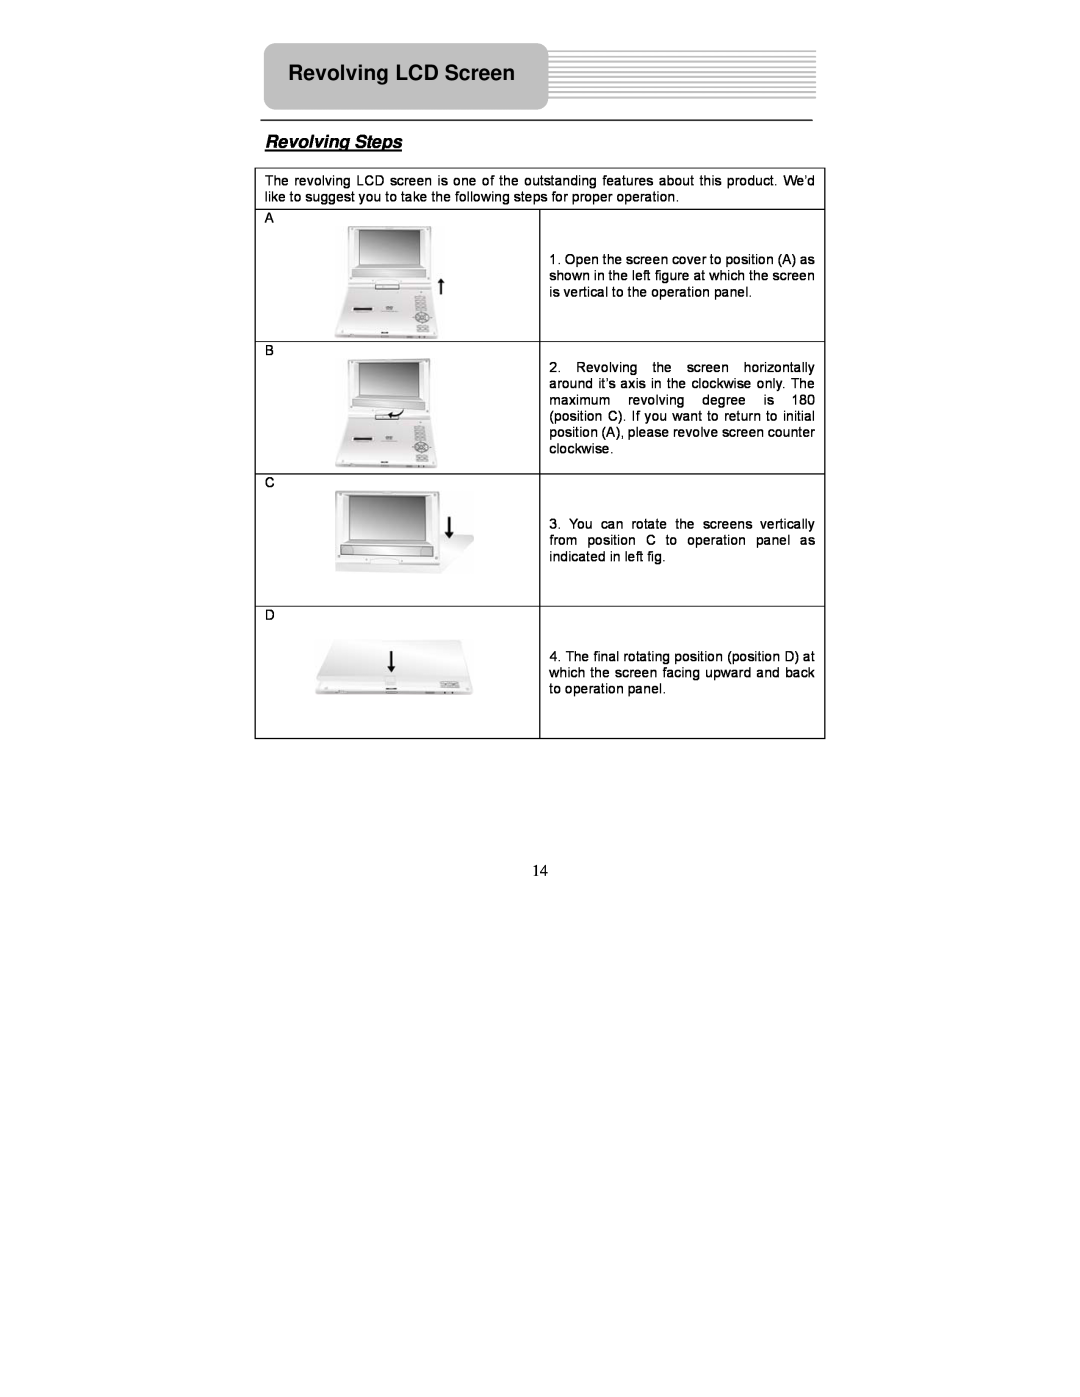 Polaroid PDM-0725 operation manual Revolving LCD Screen, Revolving Steps 